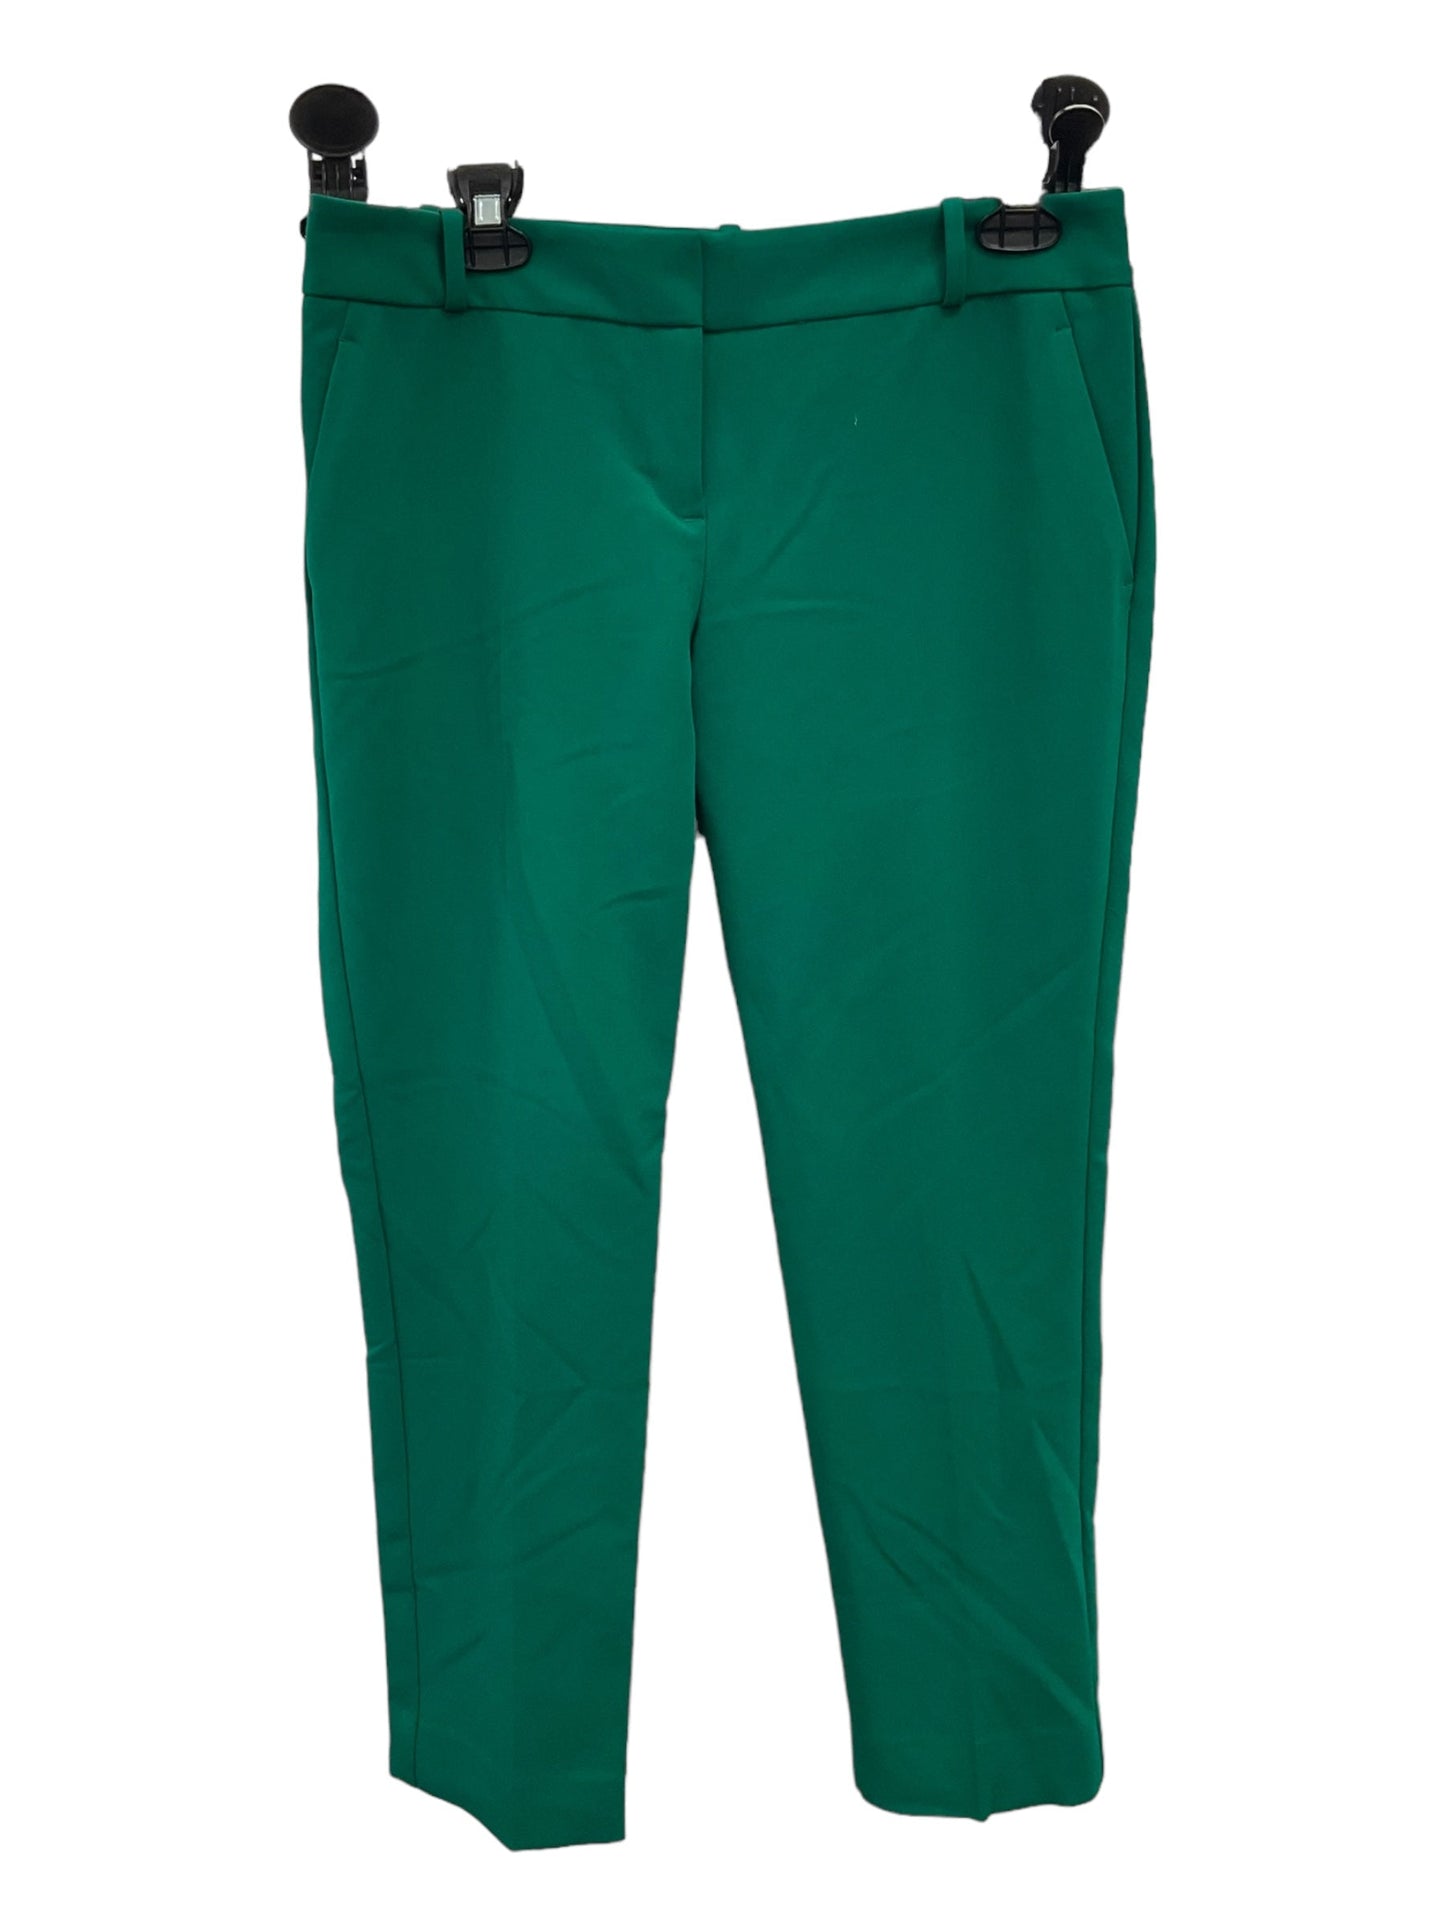 Green Pants Dress Limited, Size 6